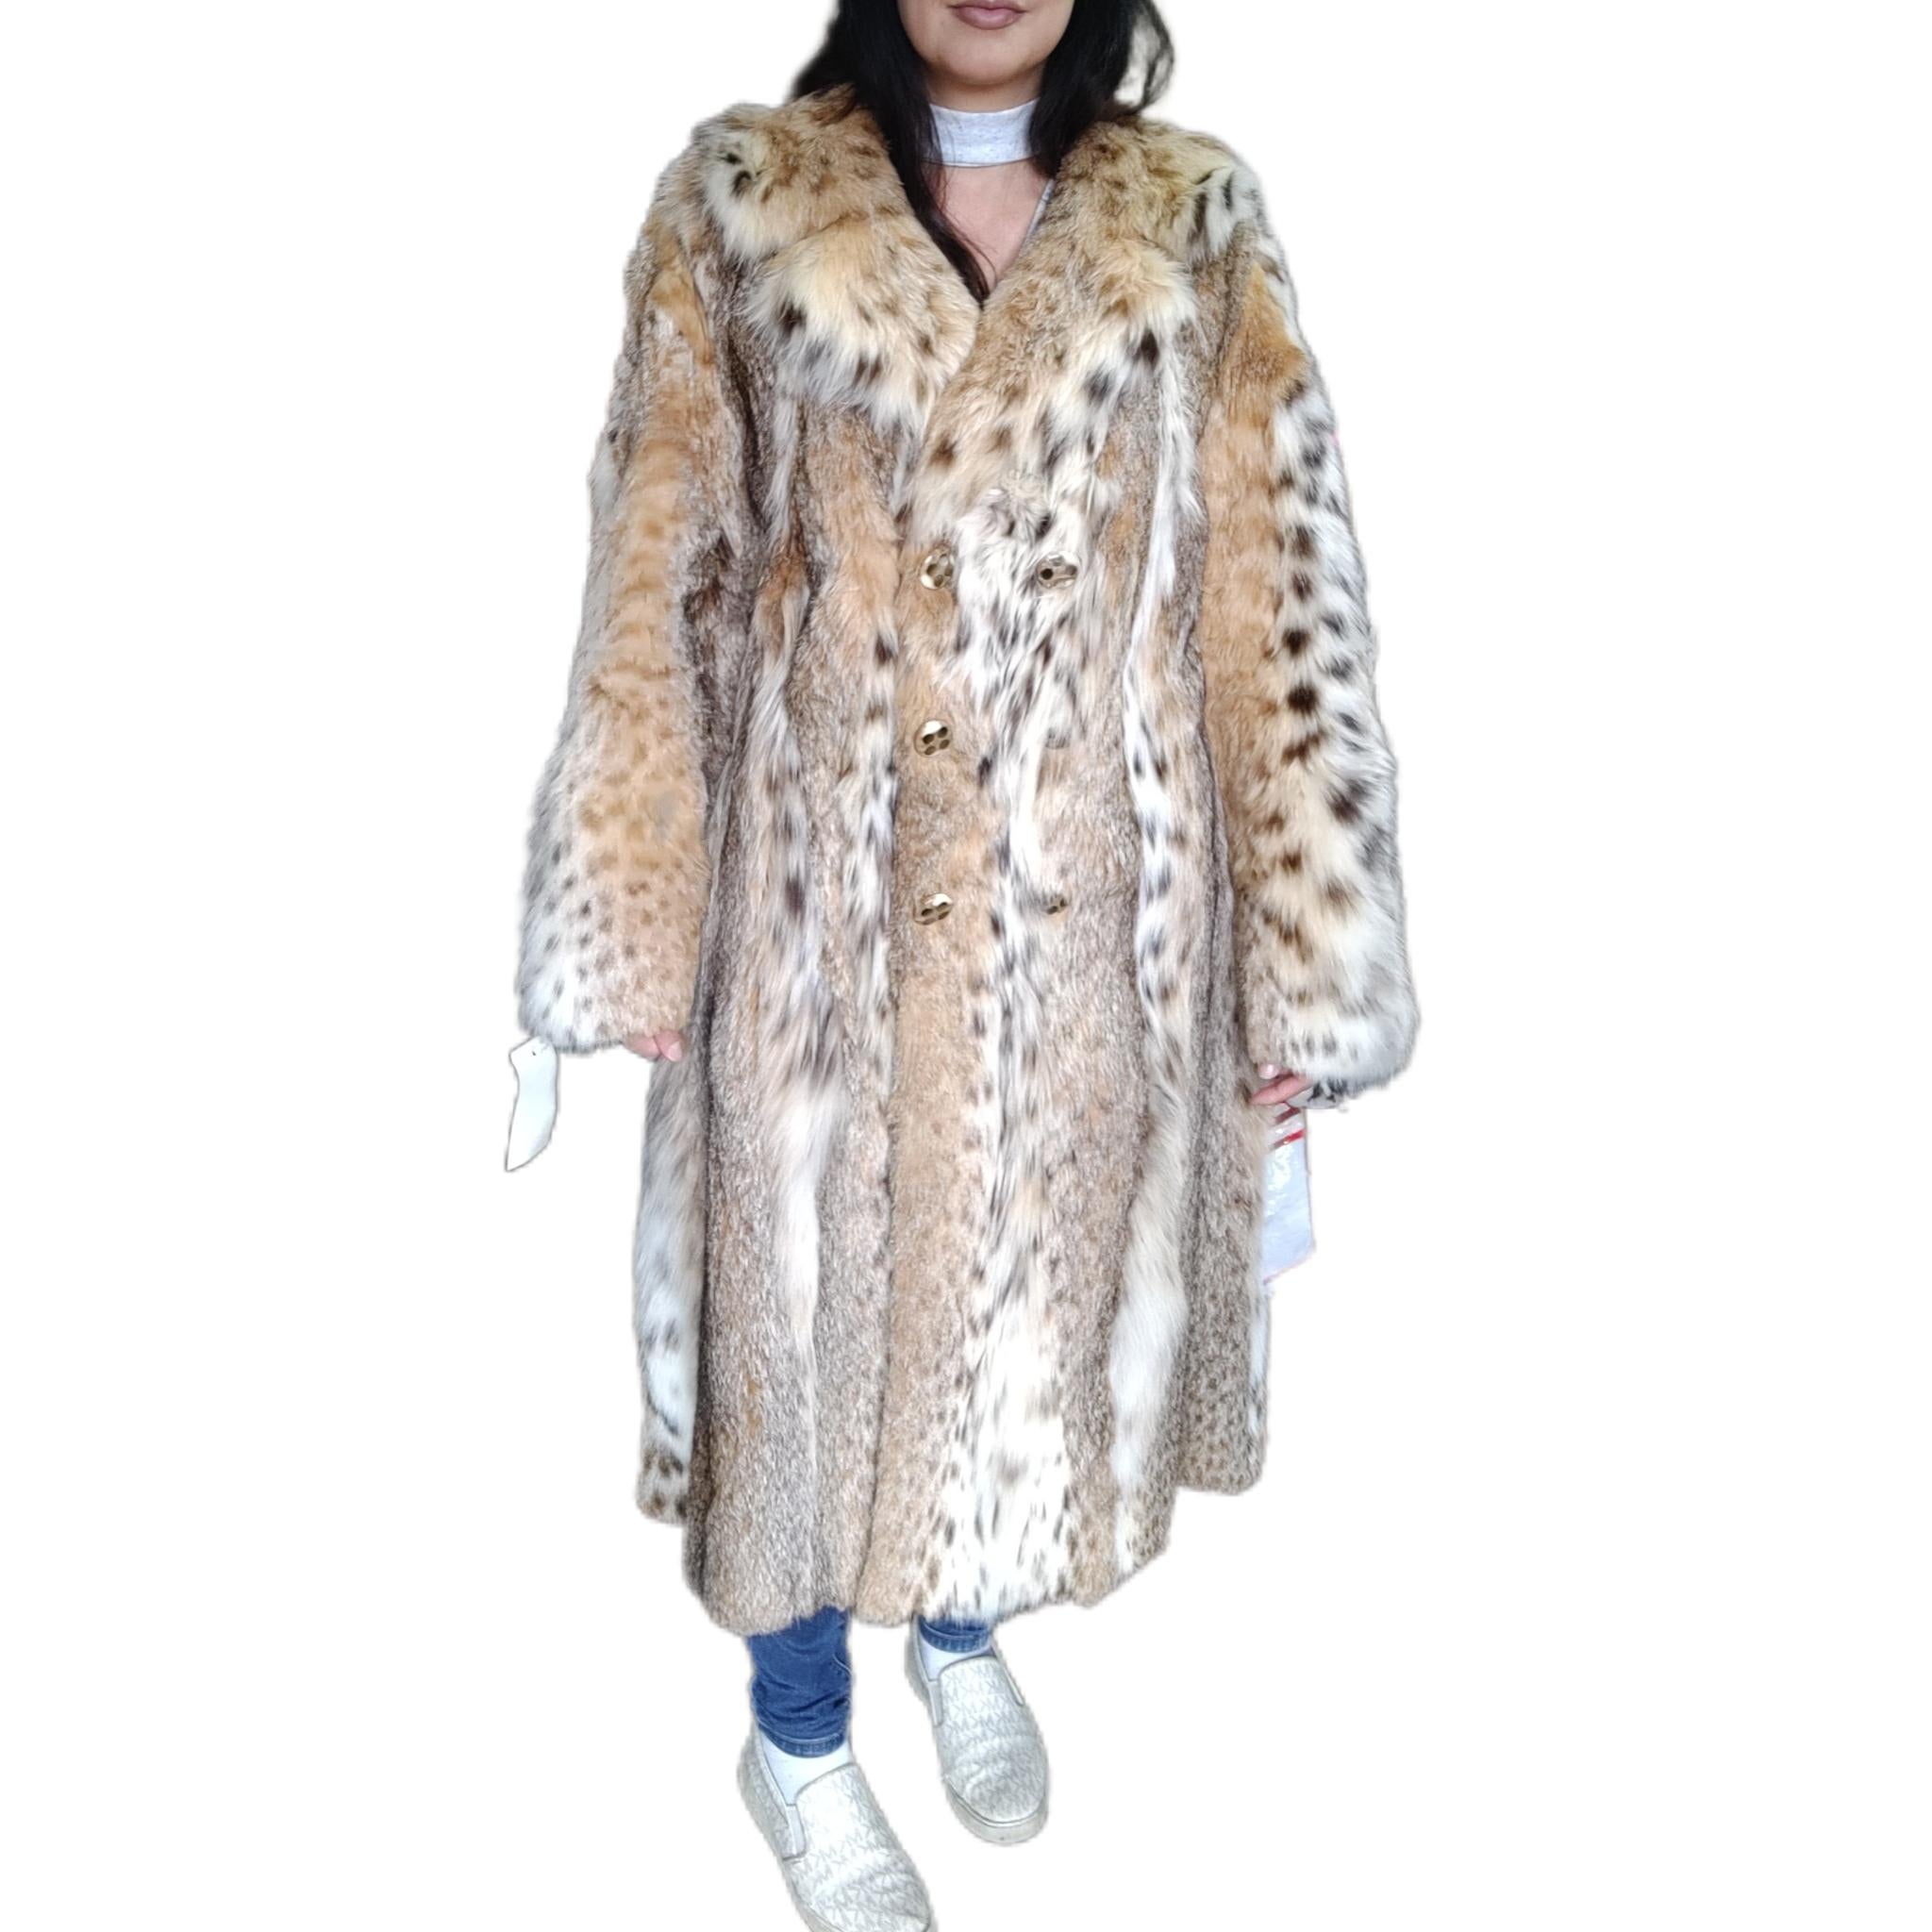 Brand new Vintage lynx fur coat size 4-6 1